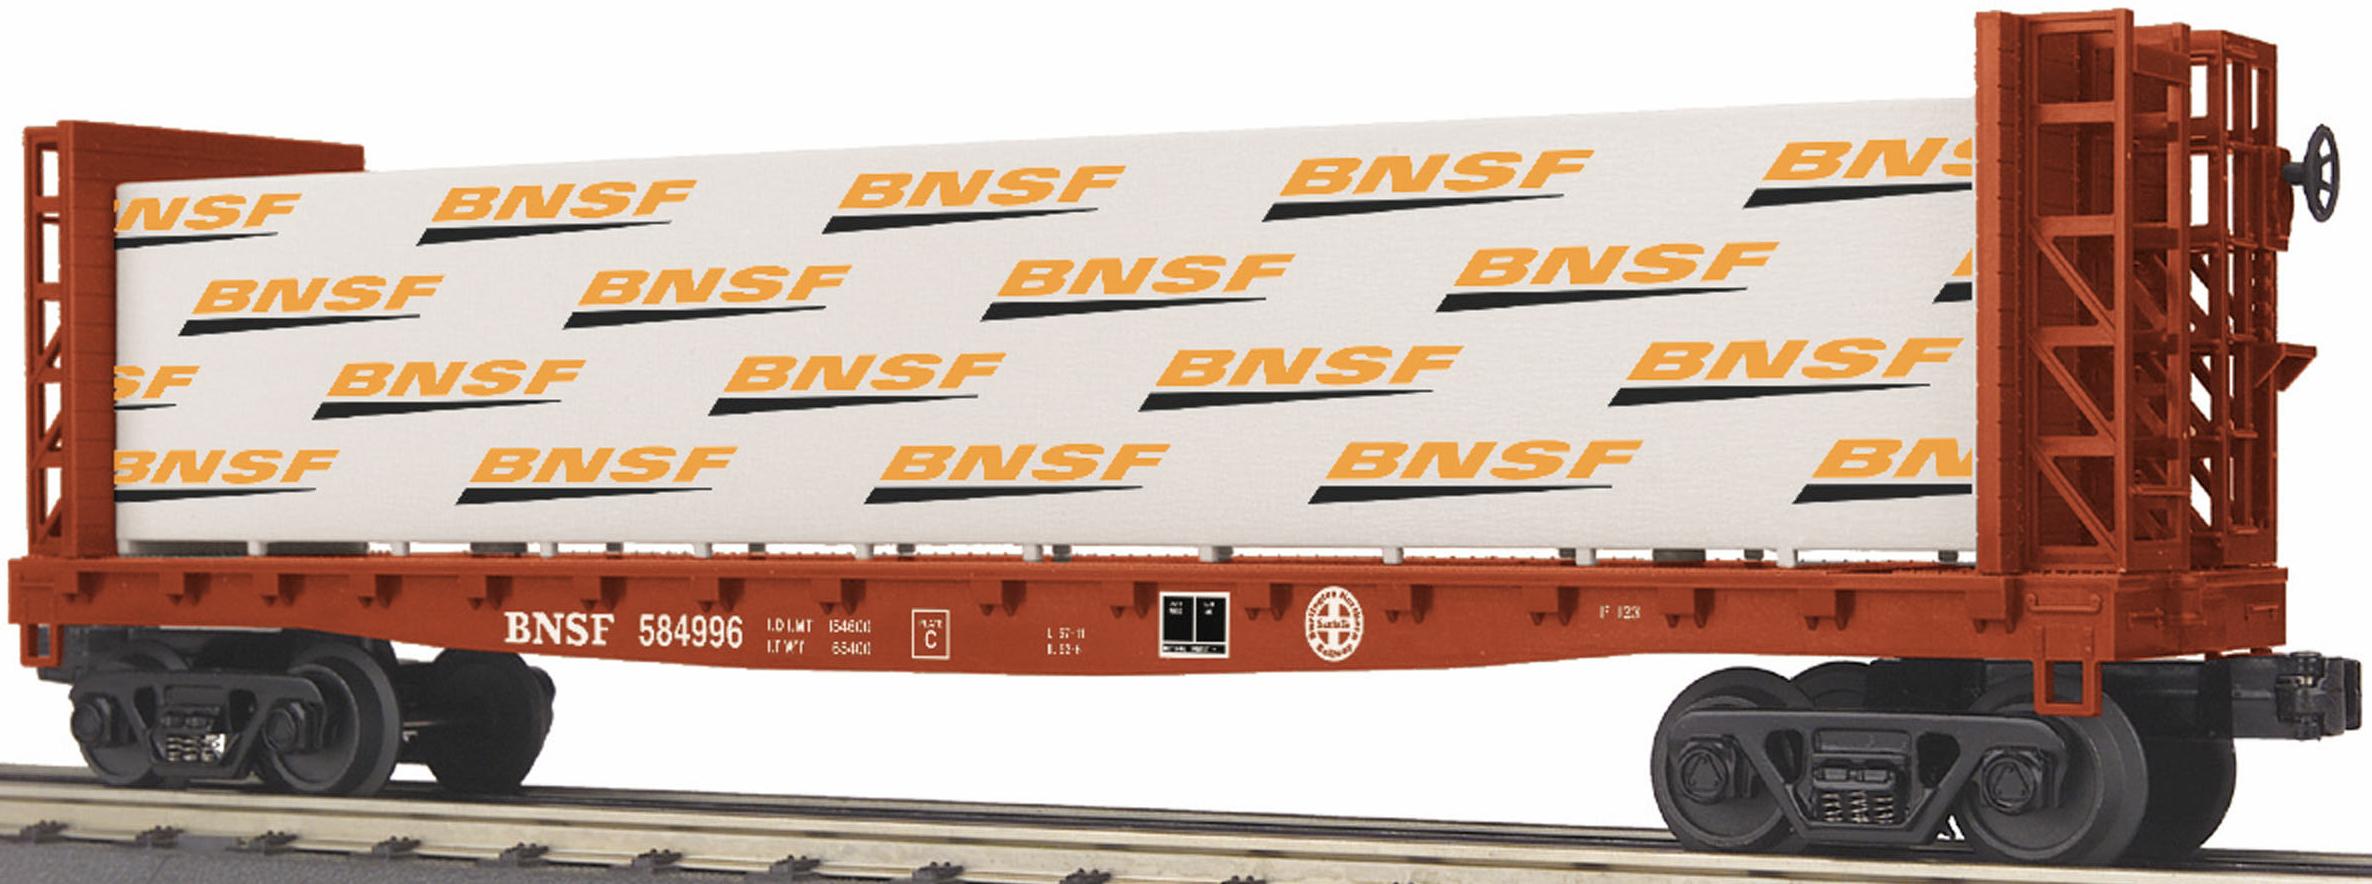 BNSF Flat Car w/Bulkheads & Lumber Load image